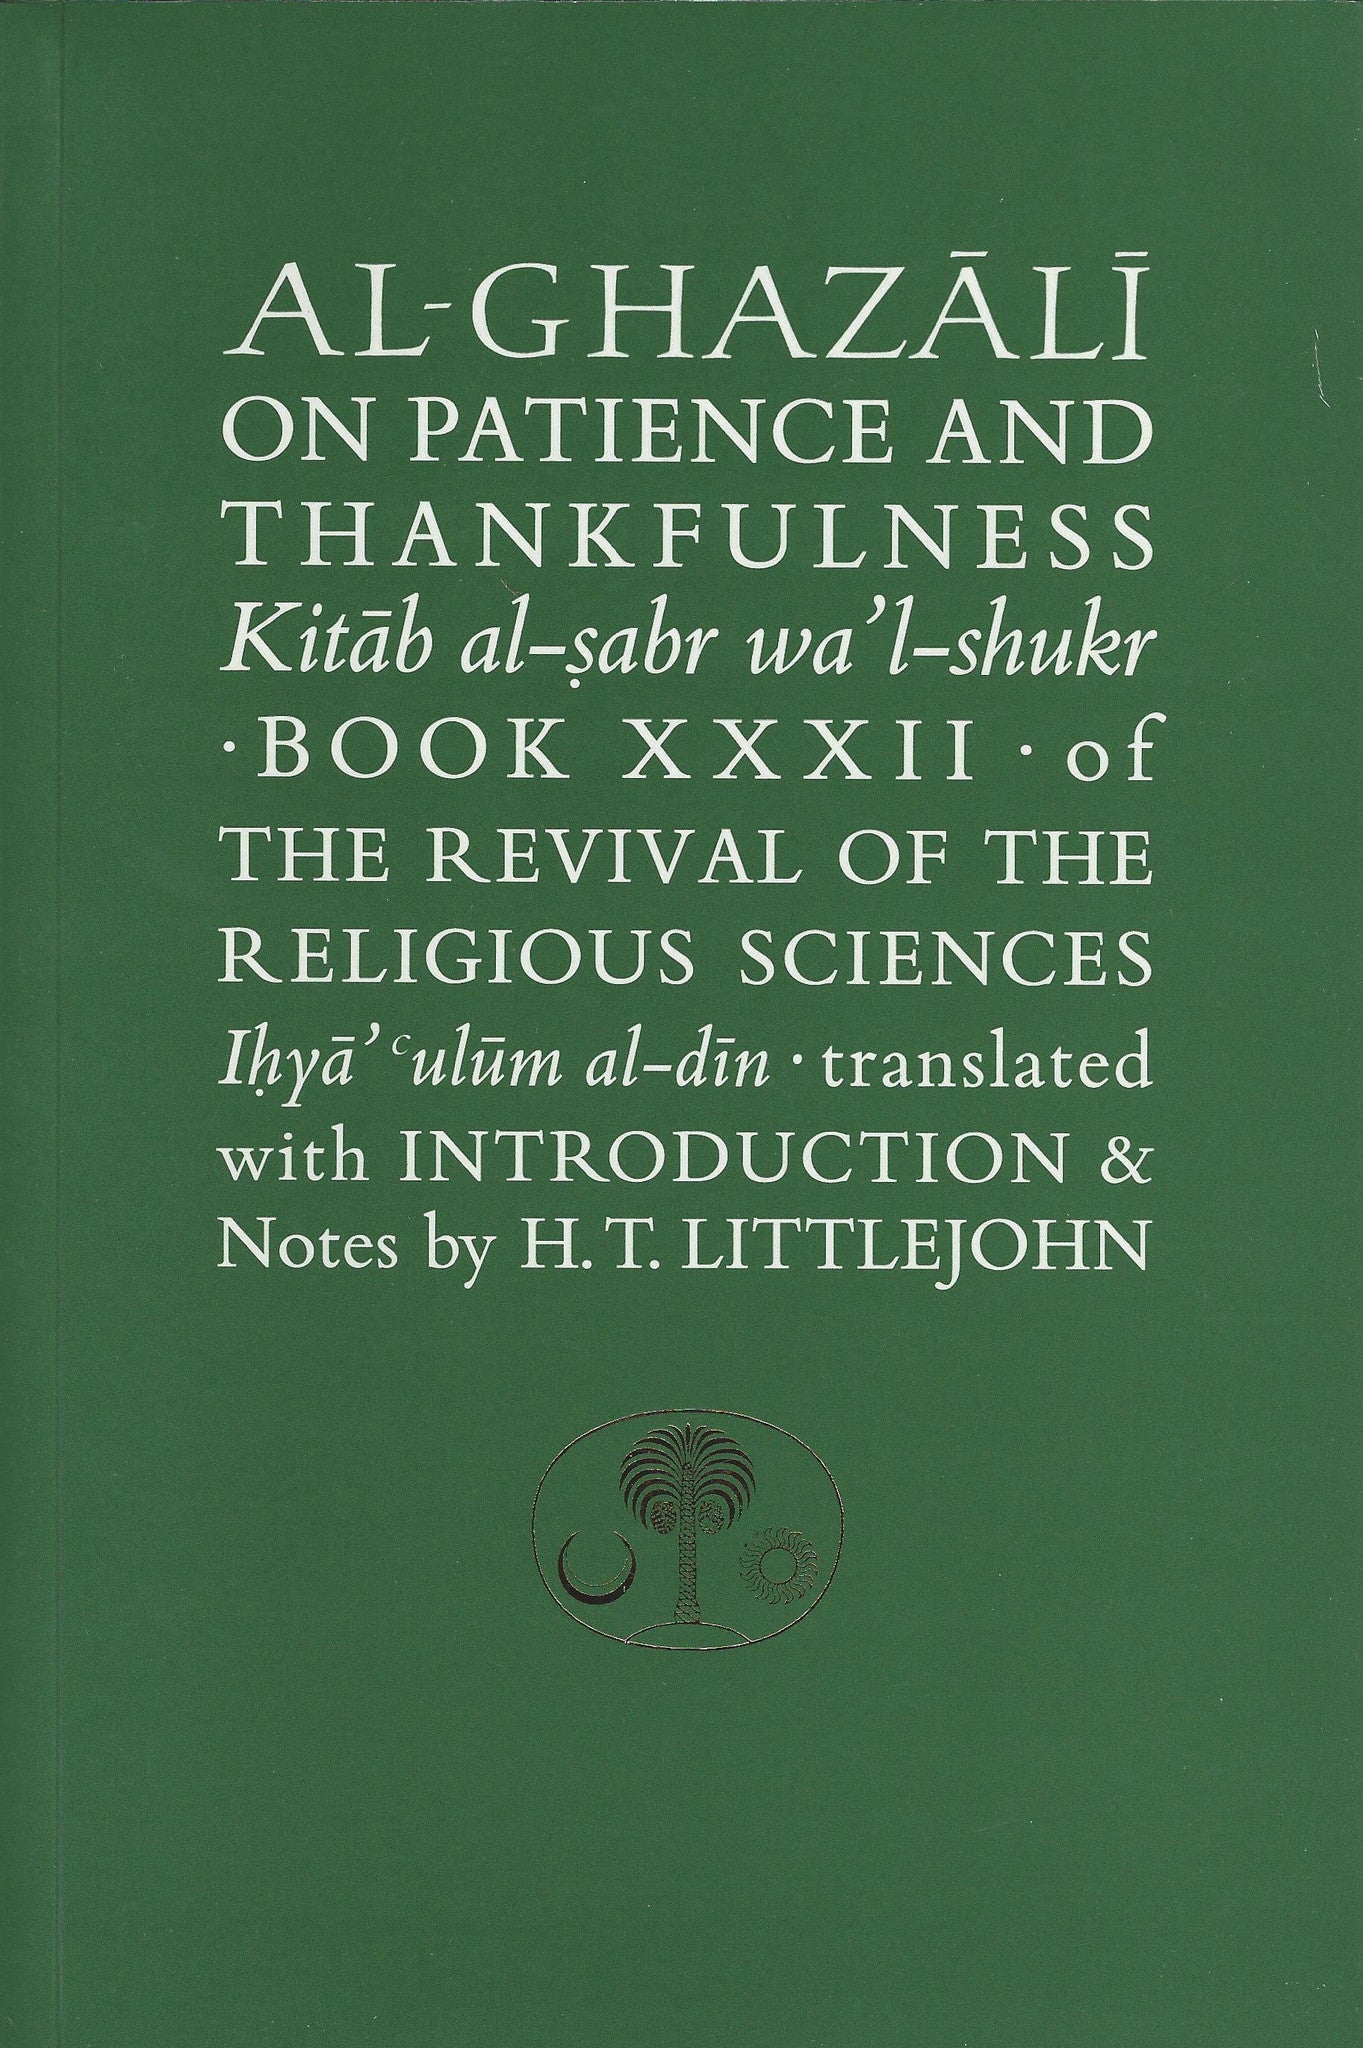 Al-Ghazali on Patience and Thankfulness: Book XXXII of the Revival of the Religious Sciences (Ghazali Series) , Book - Daybreak International Bookstore, Daybreak Press Global Bookshop
